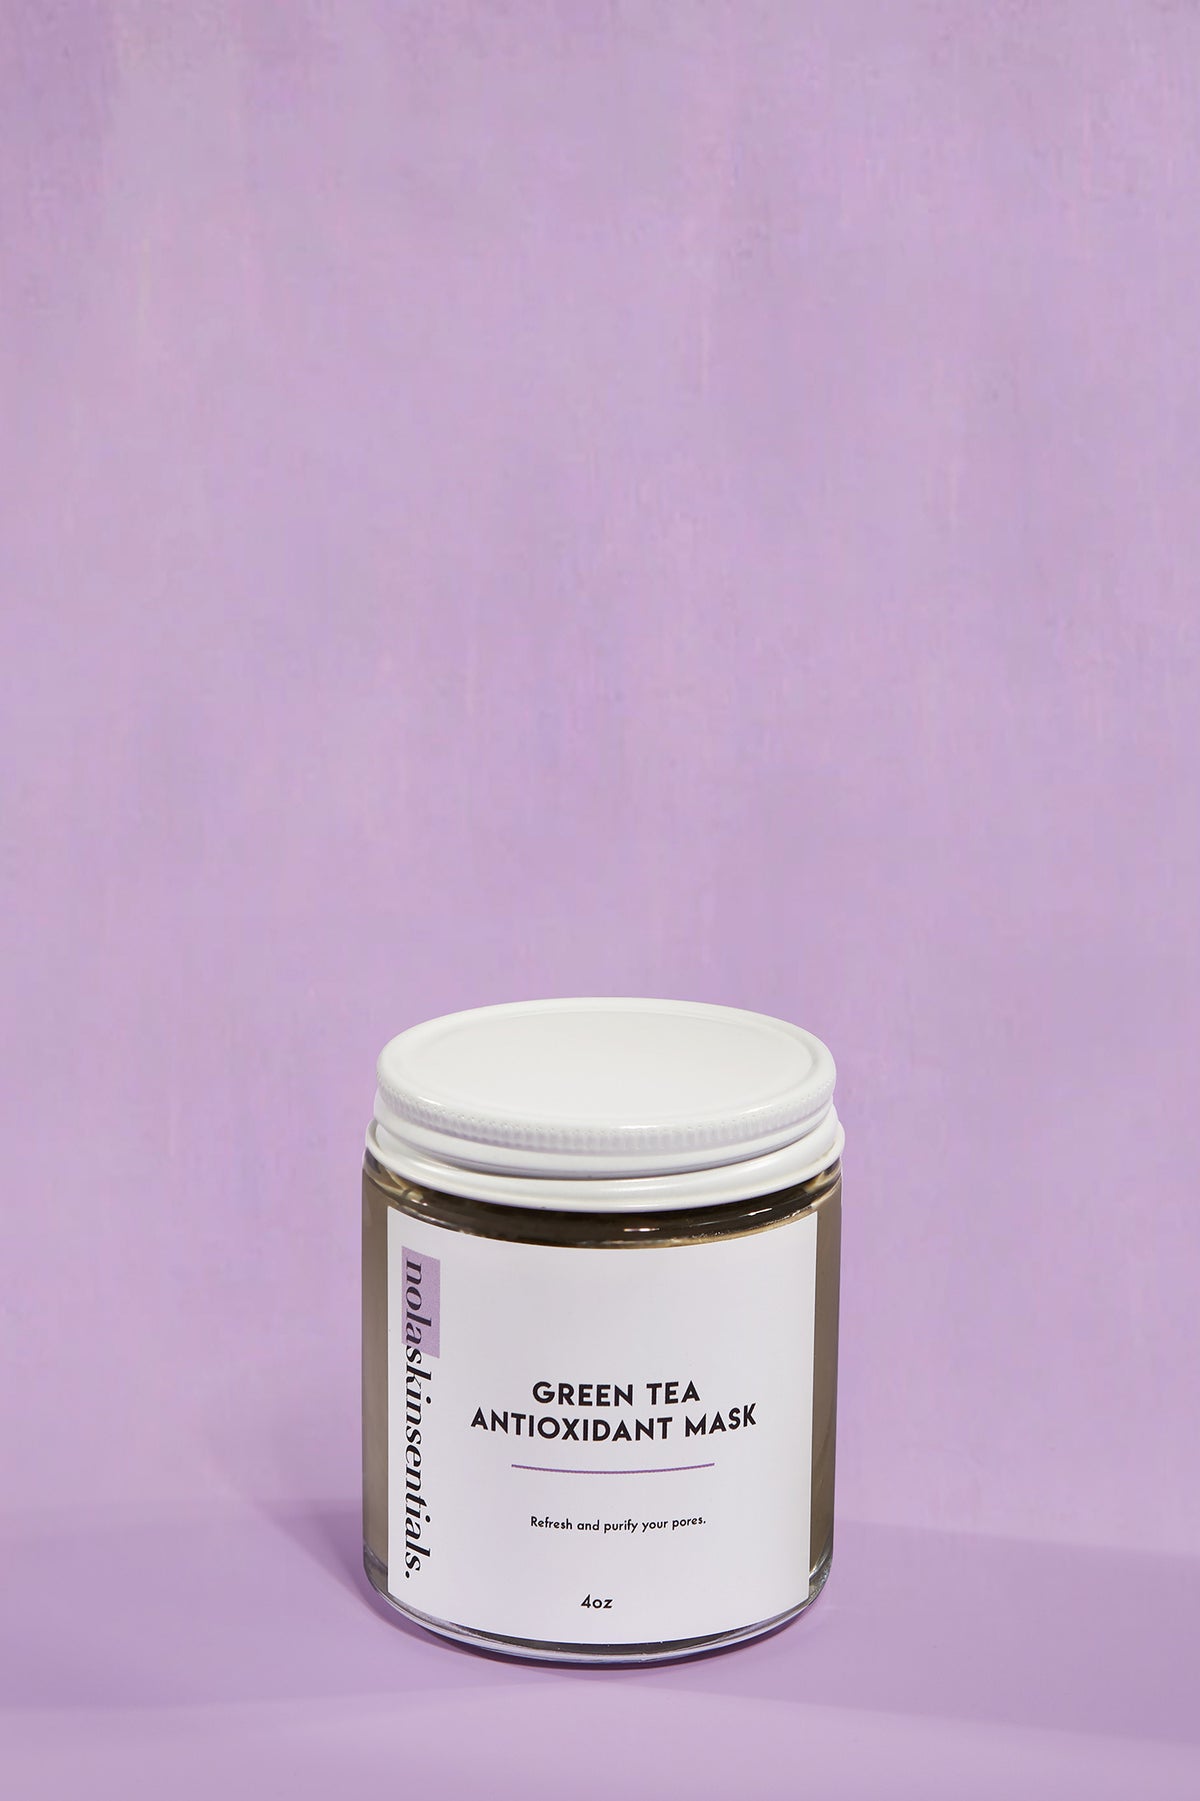 Nolaskinsentials Green Tea Antioxidant Mask - Revitalize And Refresh